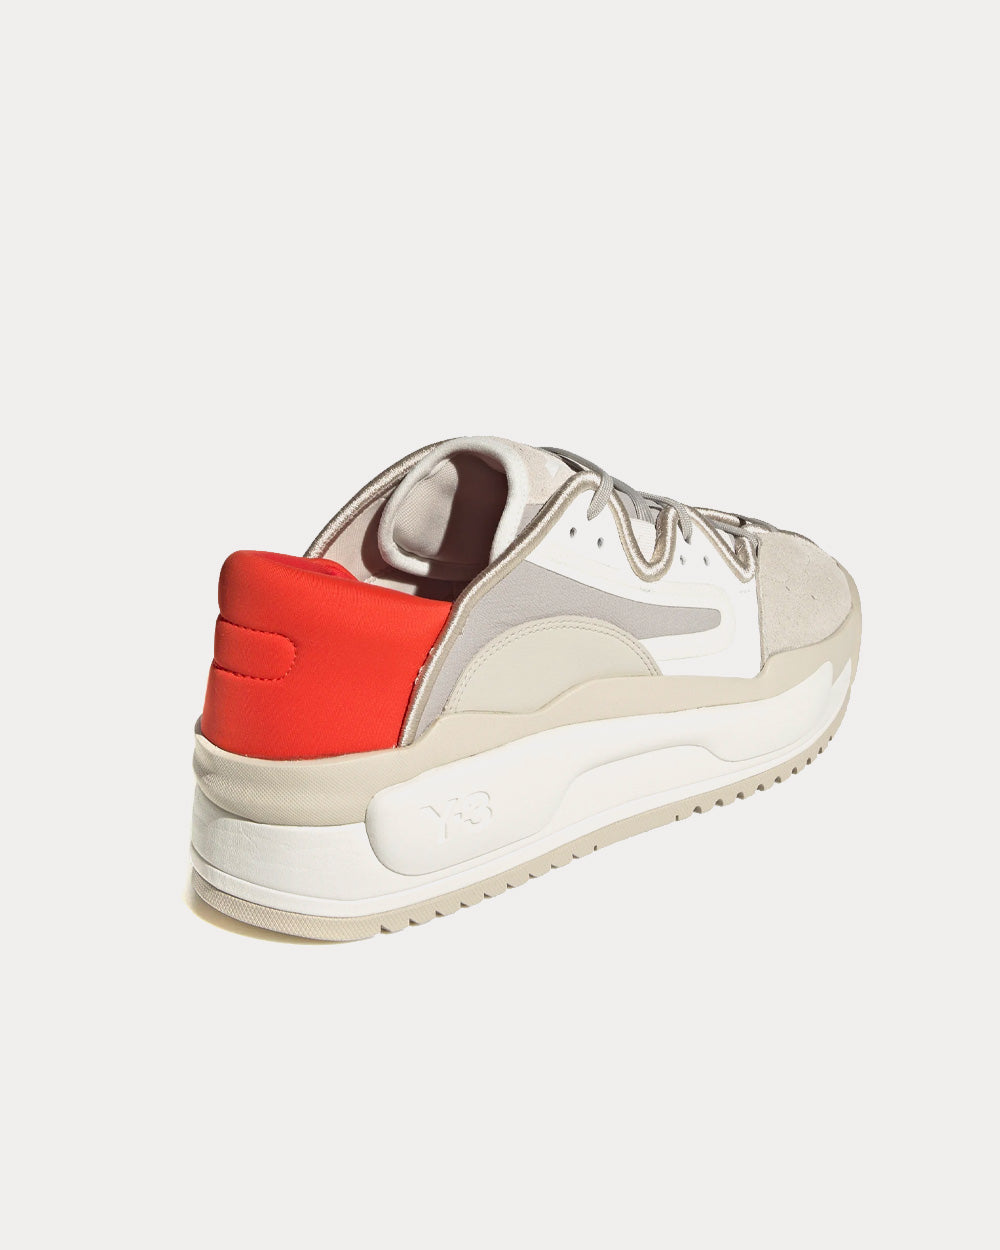 Y-3 - Hokori II Bliss / Light Brown / Bold Orange Low Top Sneakers